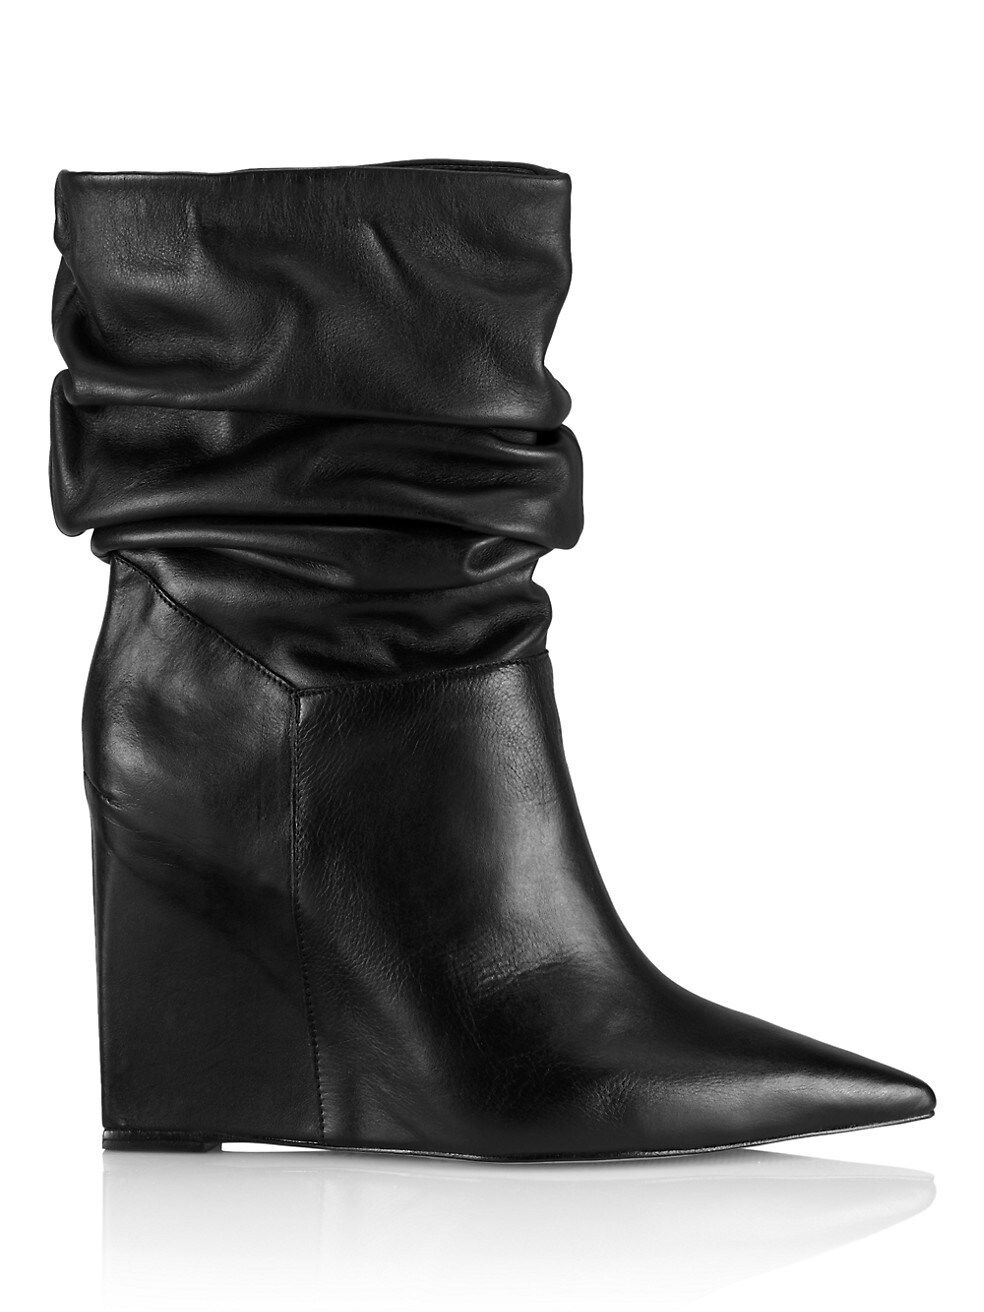 Schutz Ashlee Leather Wedge Boots | Saks Fifth Avenue